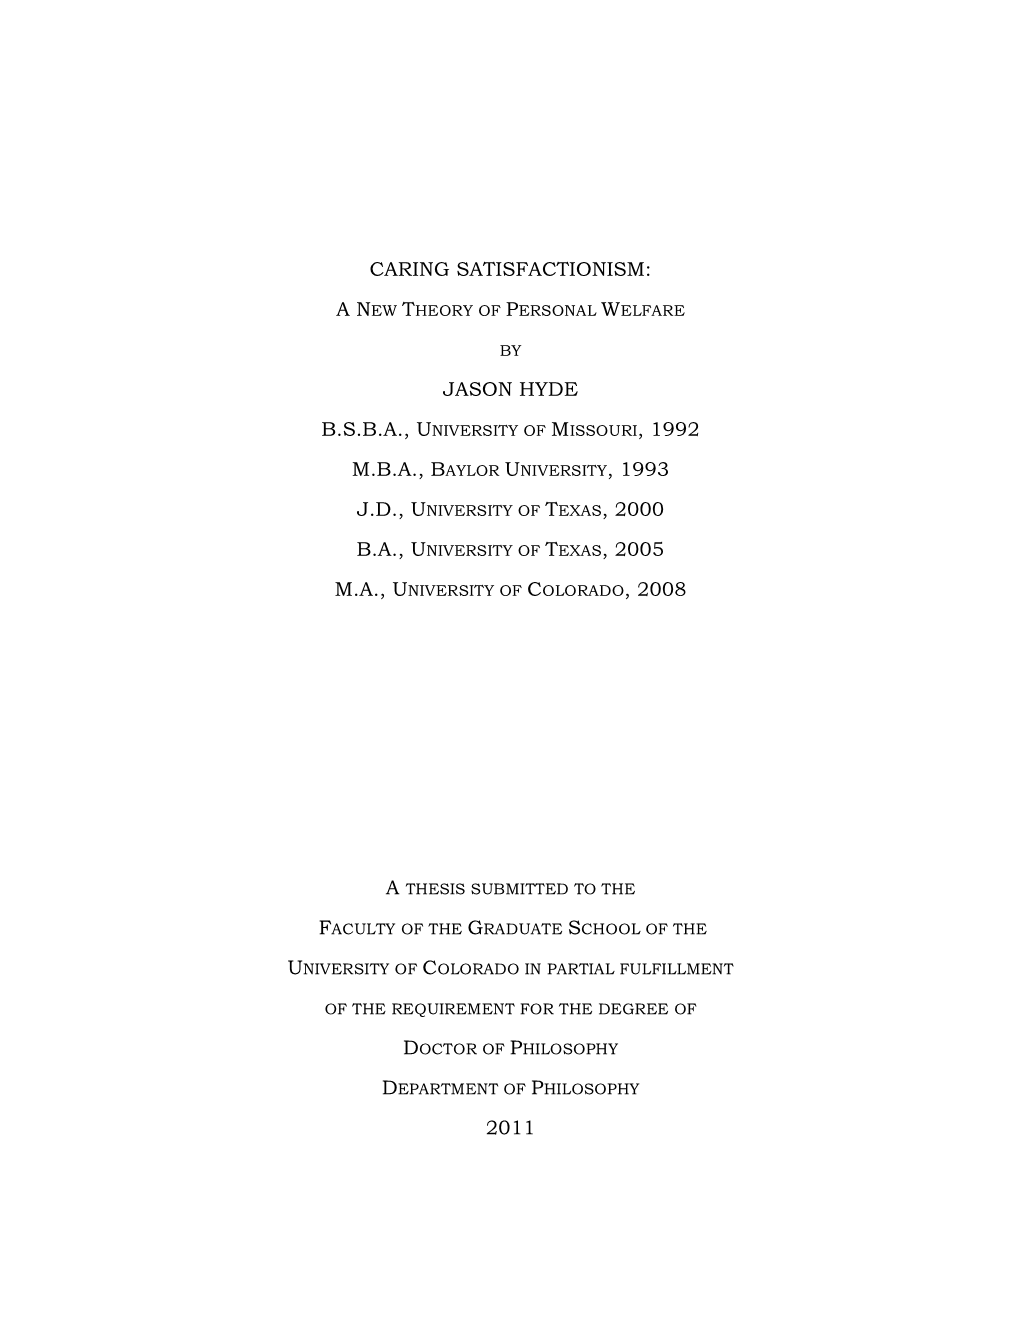 Caring Satisfactionism: Jason Hyde M.B.A., Baylor University, 1993 2011